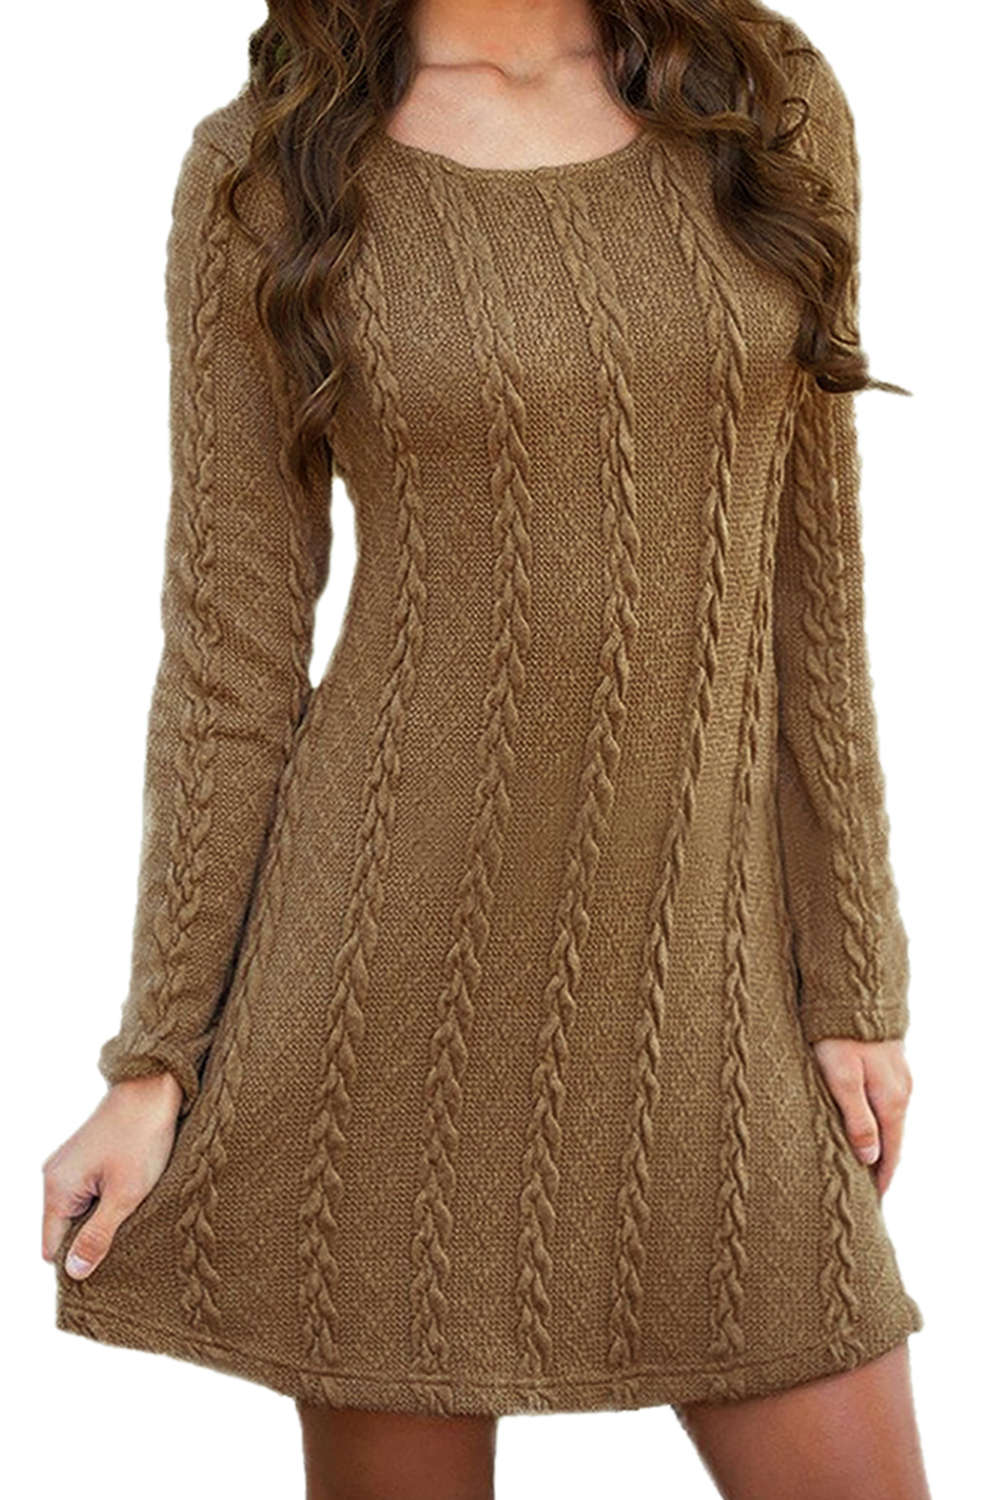 Iyasson Knitted Crewneck Sweater Dress